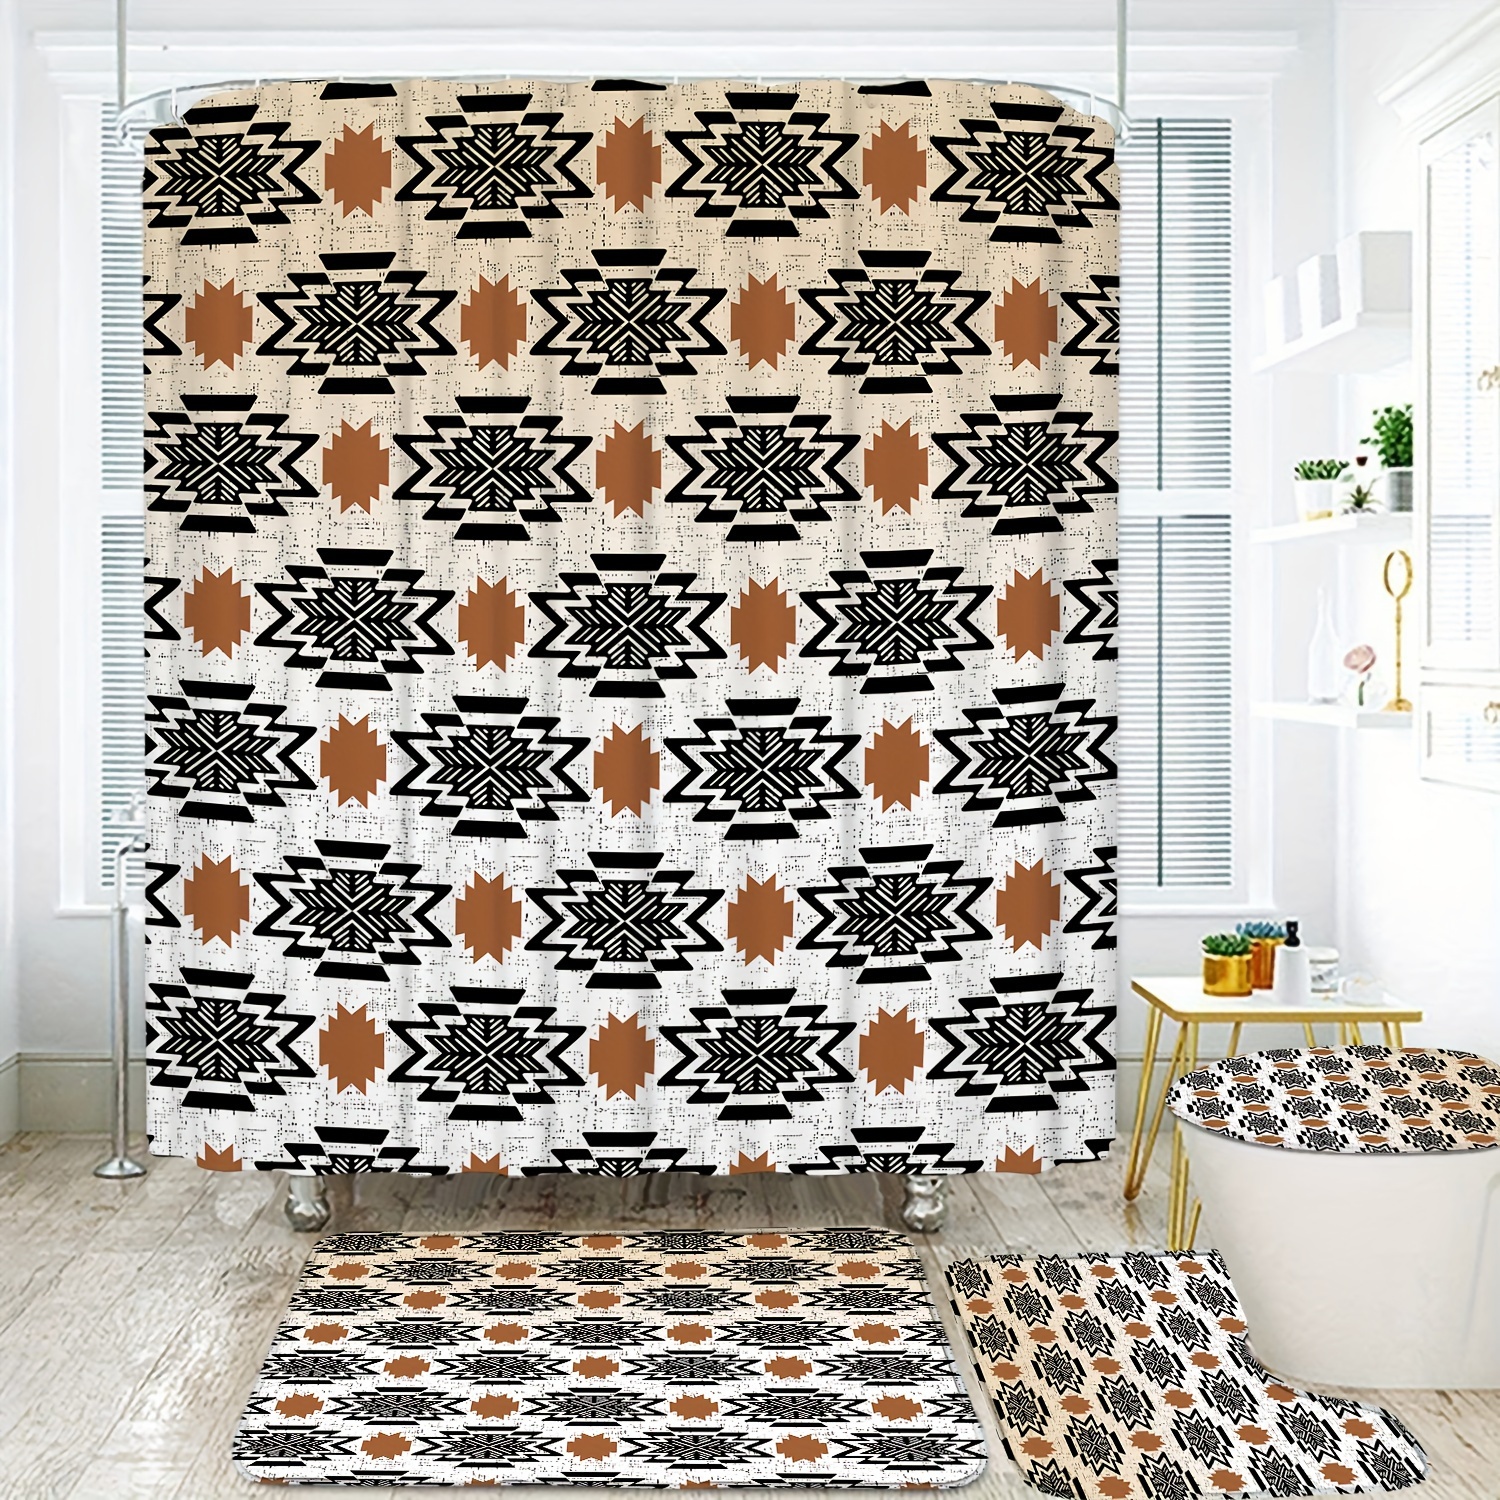 

4pcs Retro Sawtooth Totem Pattern Set, Waterproof Bath Curtain With 12 Hooks, U-shaped Mat, Toilet Cover Mat, L-shaped Mat, Bathroom Accessories, Bathroom Decor